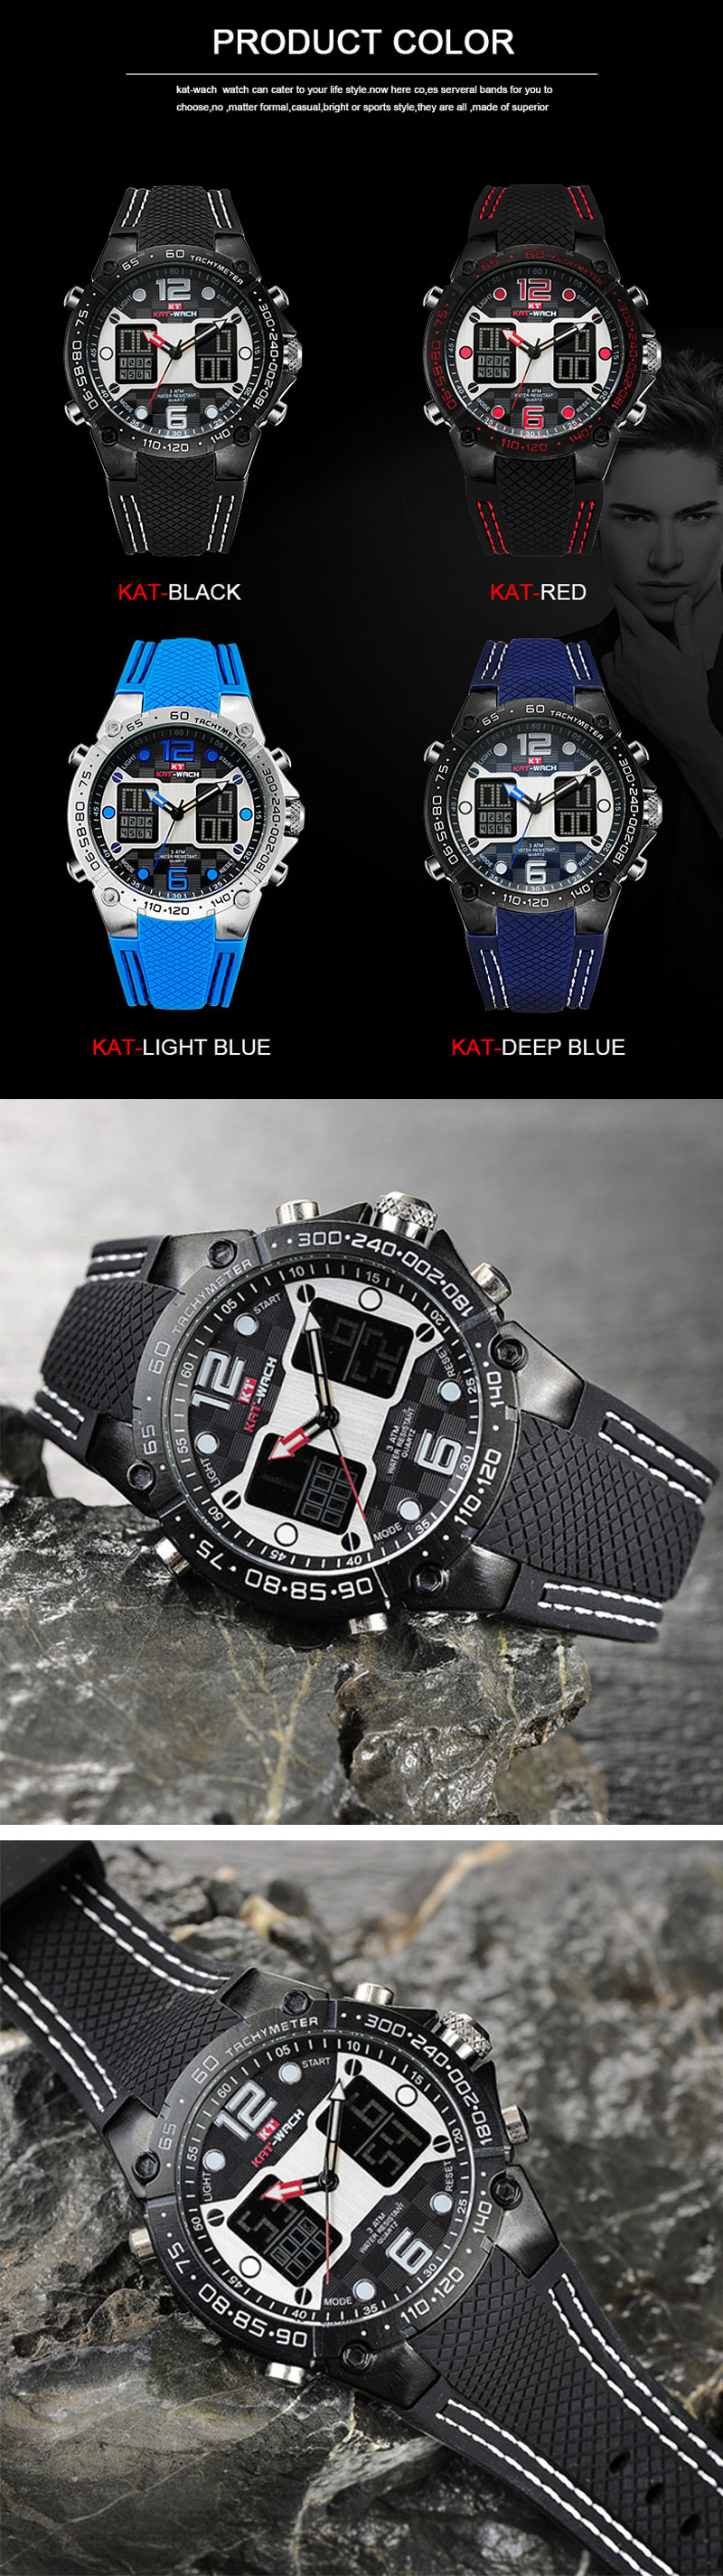 KAT-WACH-KT717-Dual-Display-Digital-Watch-Cozy-Silicone-Strap-Luminous-Chronograph-Men-Sport-Watch-1286731